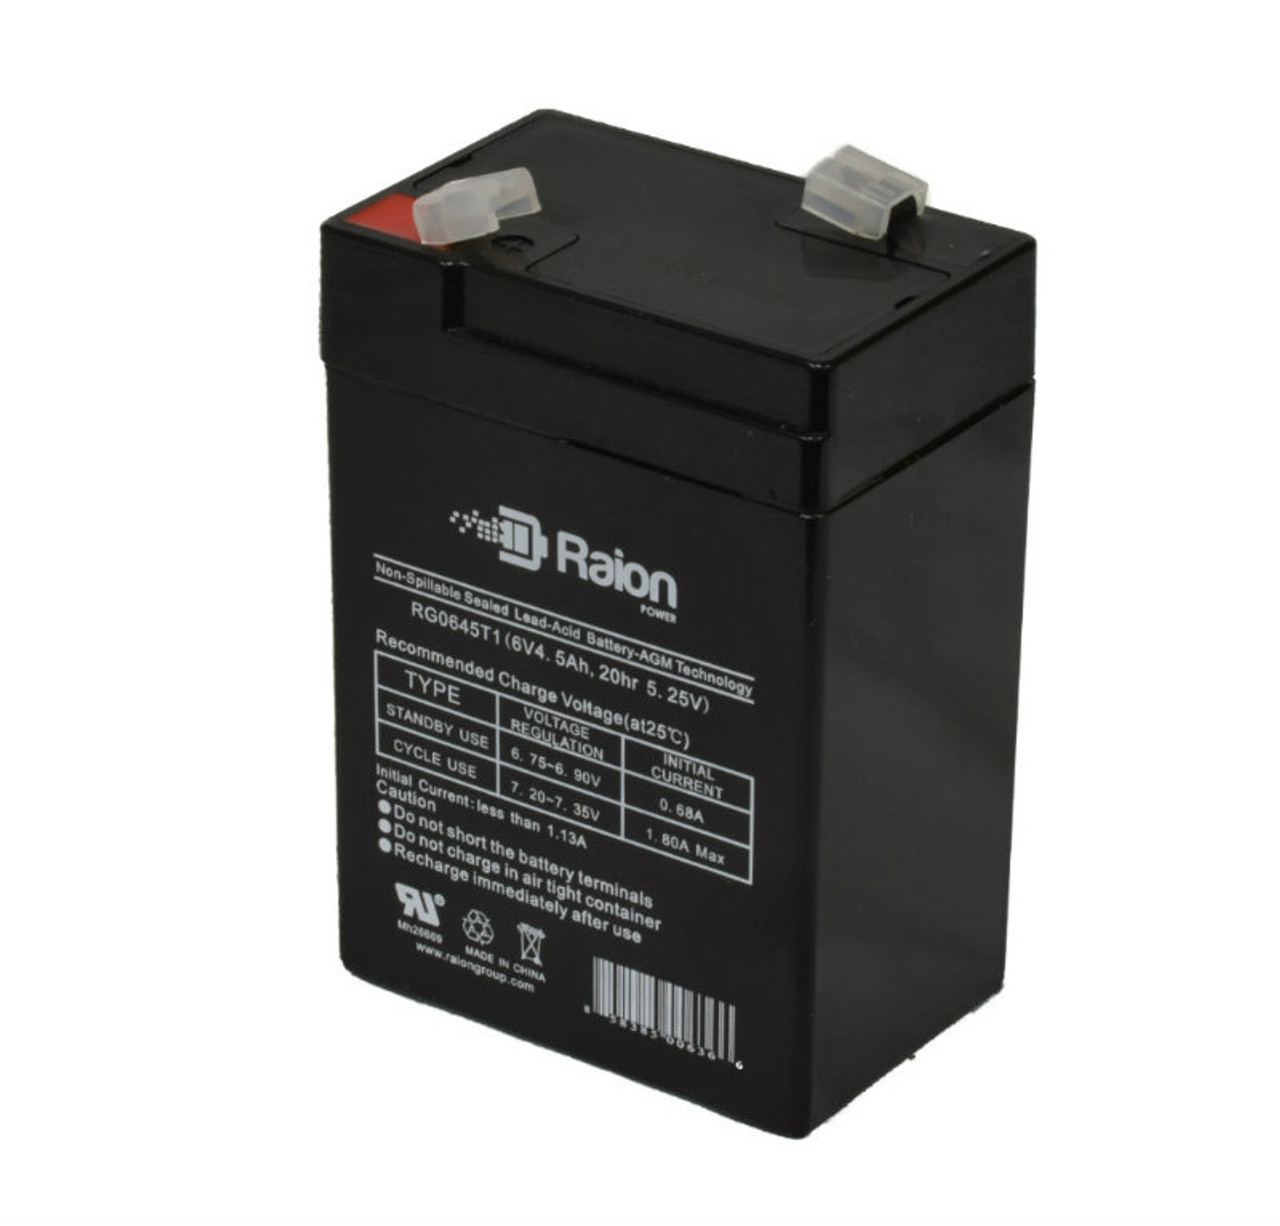 Raion Power RG0645T1 6V 4.5Ah Replacement Spotlight Battery Cartridge for Husky 20 Million Candlepower WX2-135709